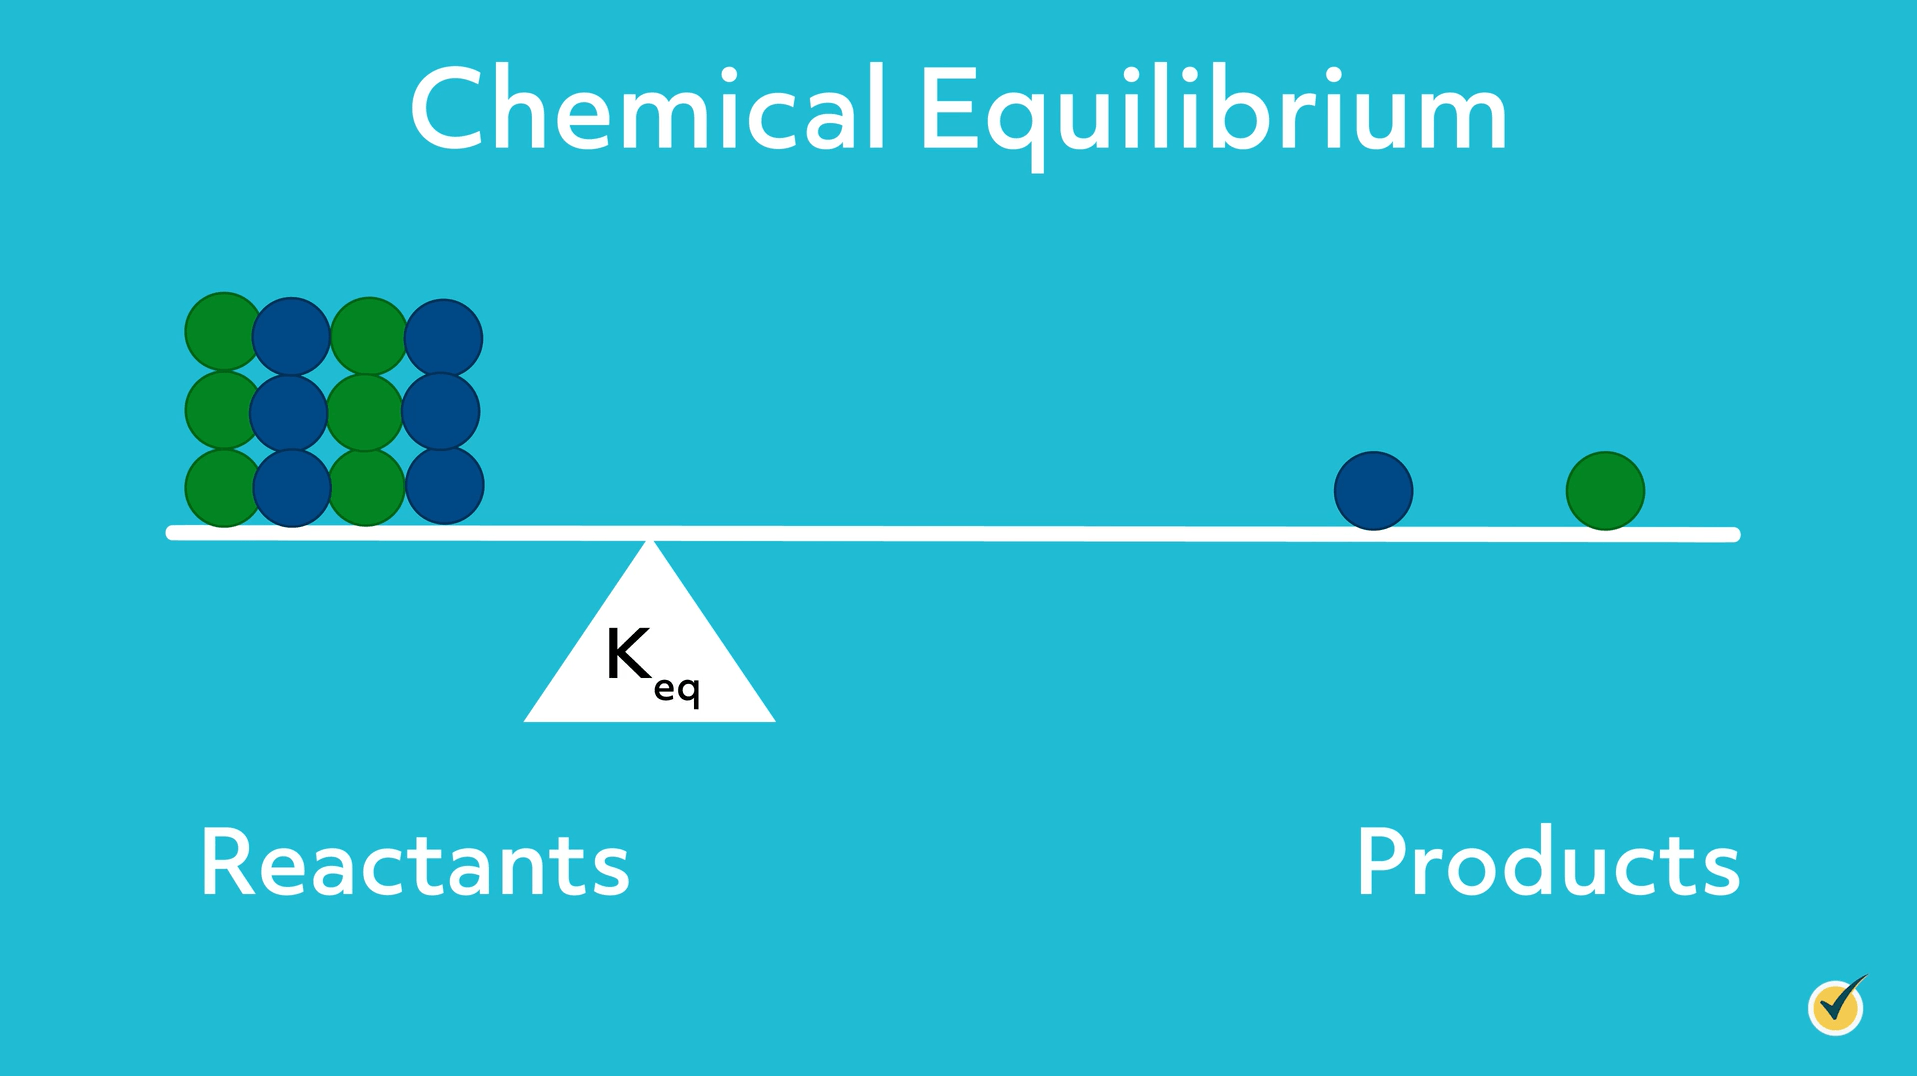 Chemical equilibrium with small equilibrium constant